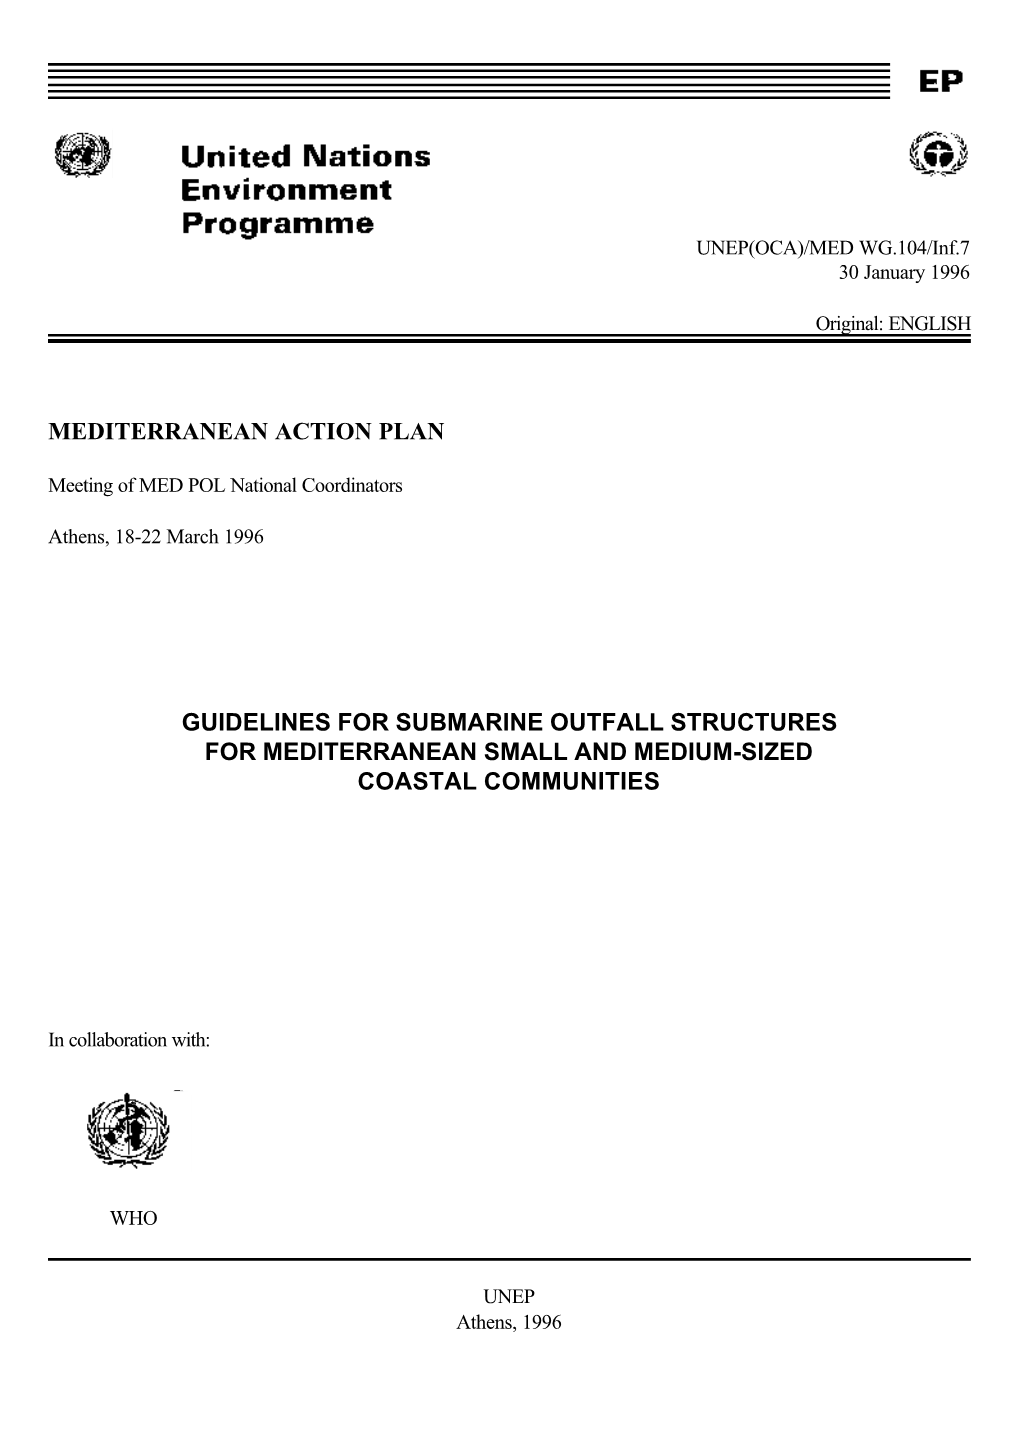 Mediterranean Action Plan Guidelines for Submarine